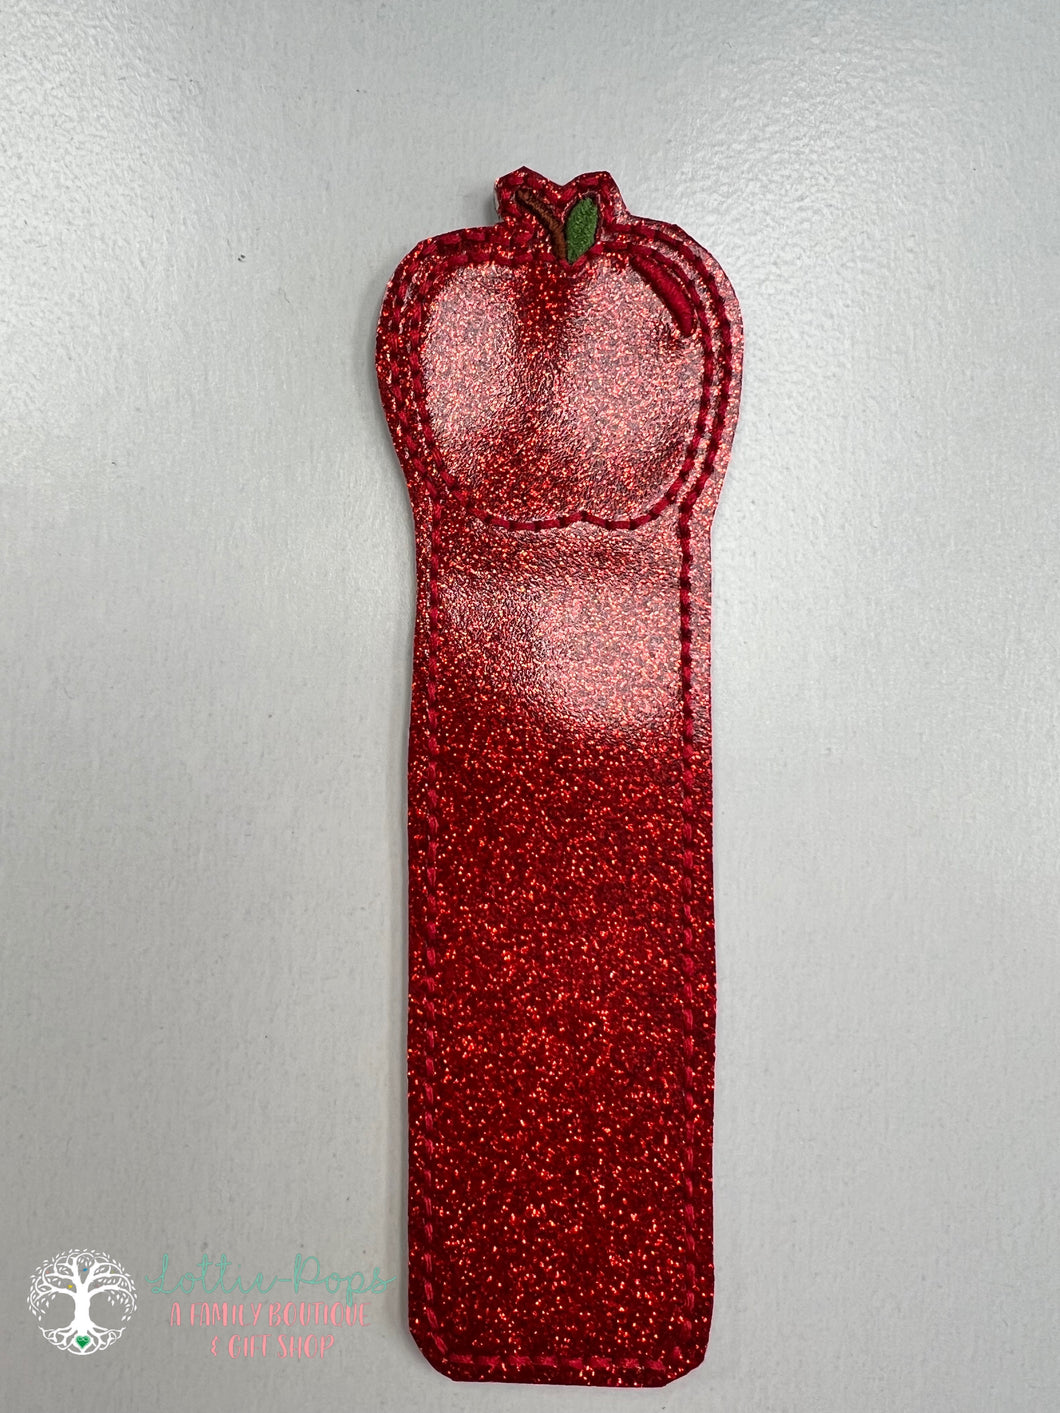 Apple bookmark - Cobblestone Crafts